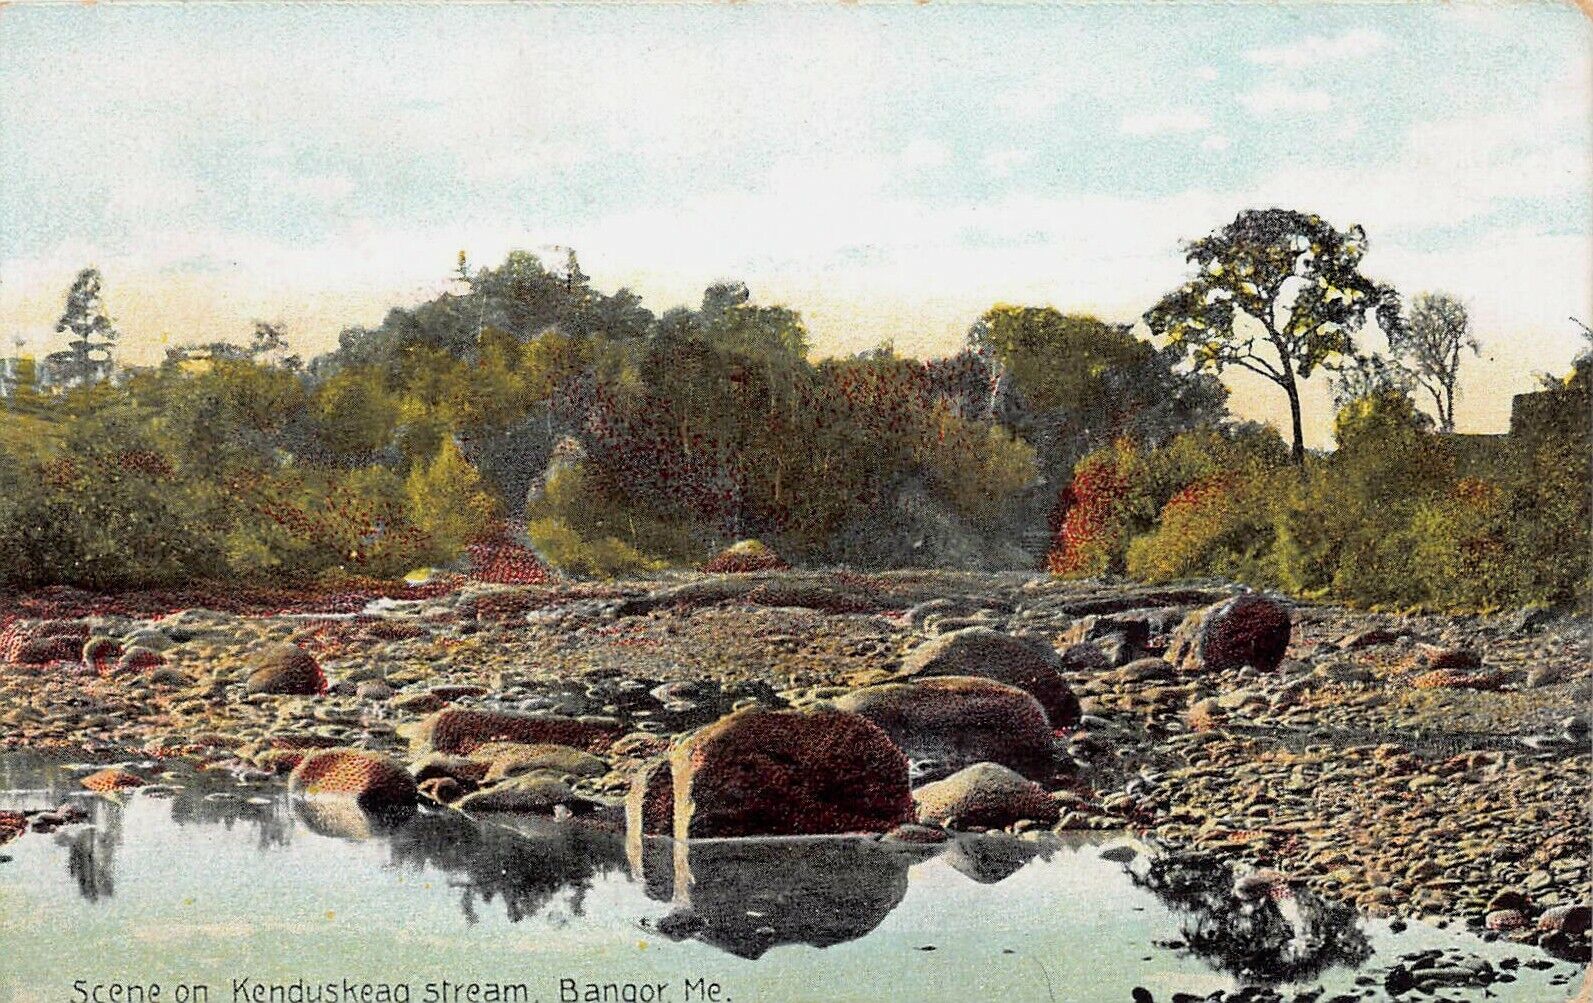 Scene on Kenduskeag Stream, Early Postcard, Used in 1911